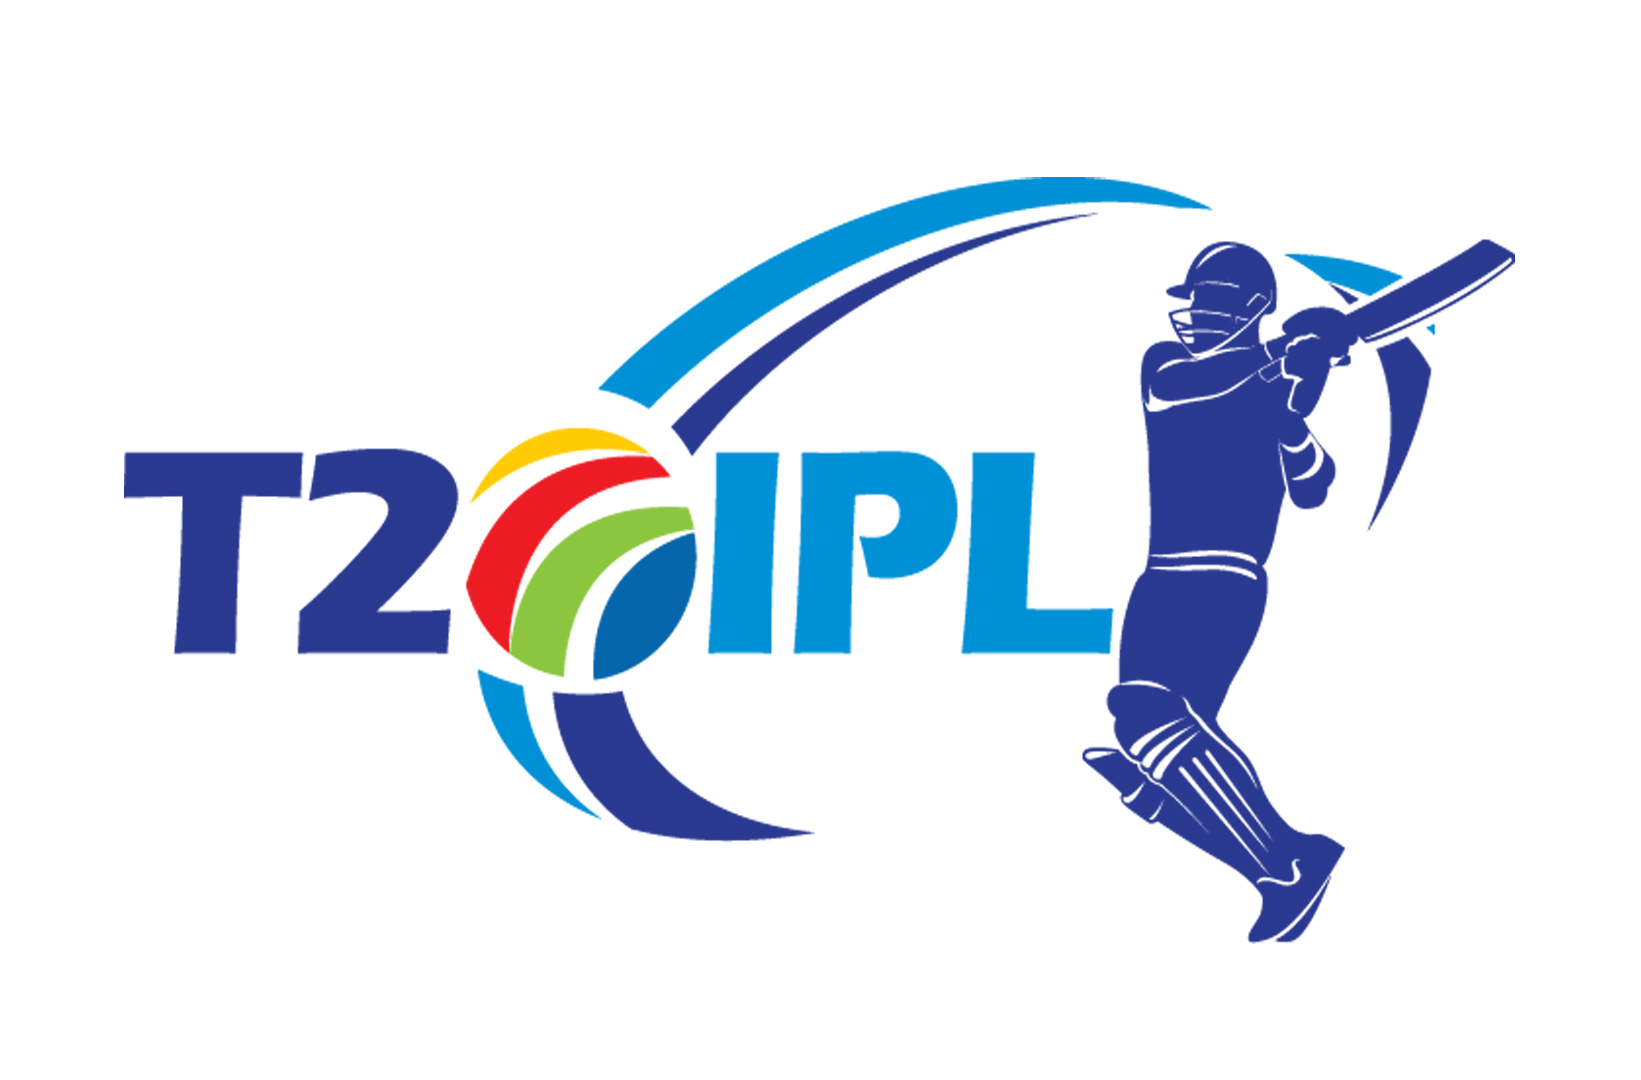 ipl 2018 logo images